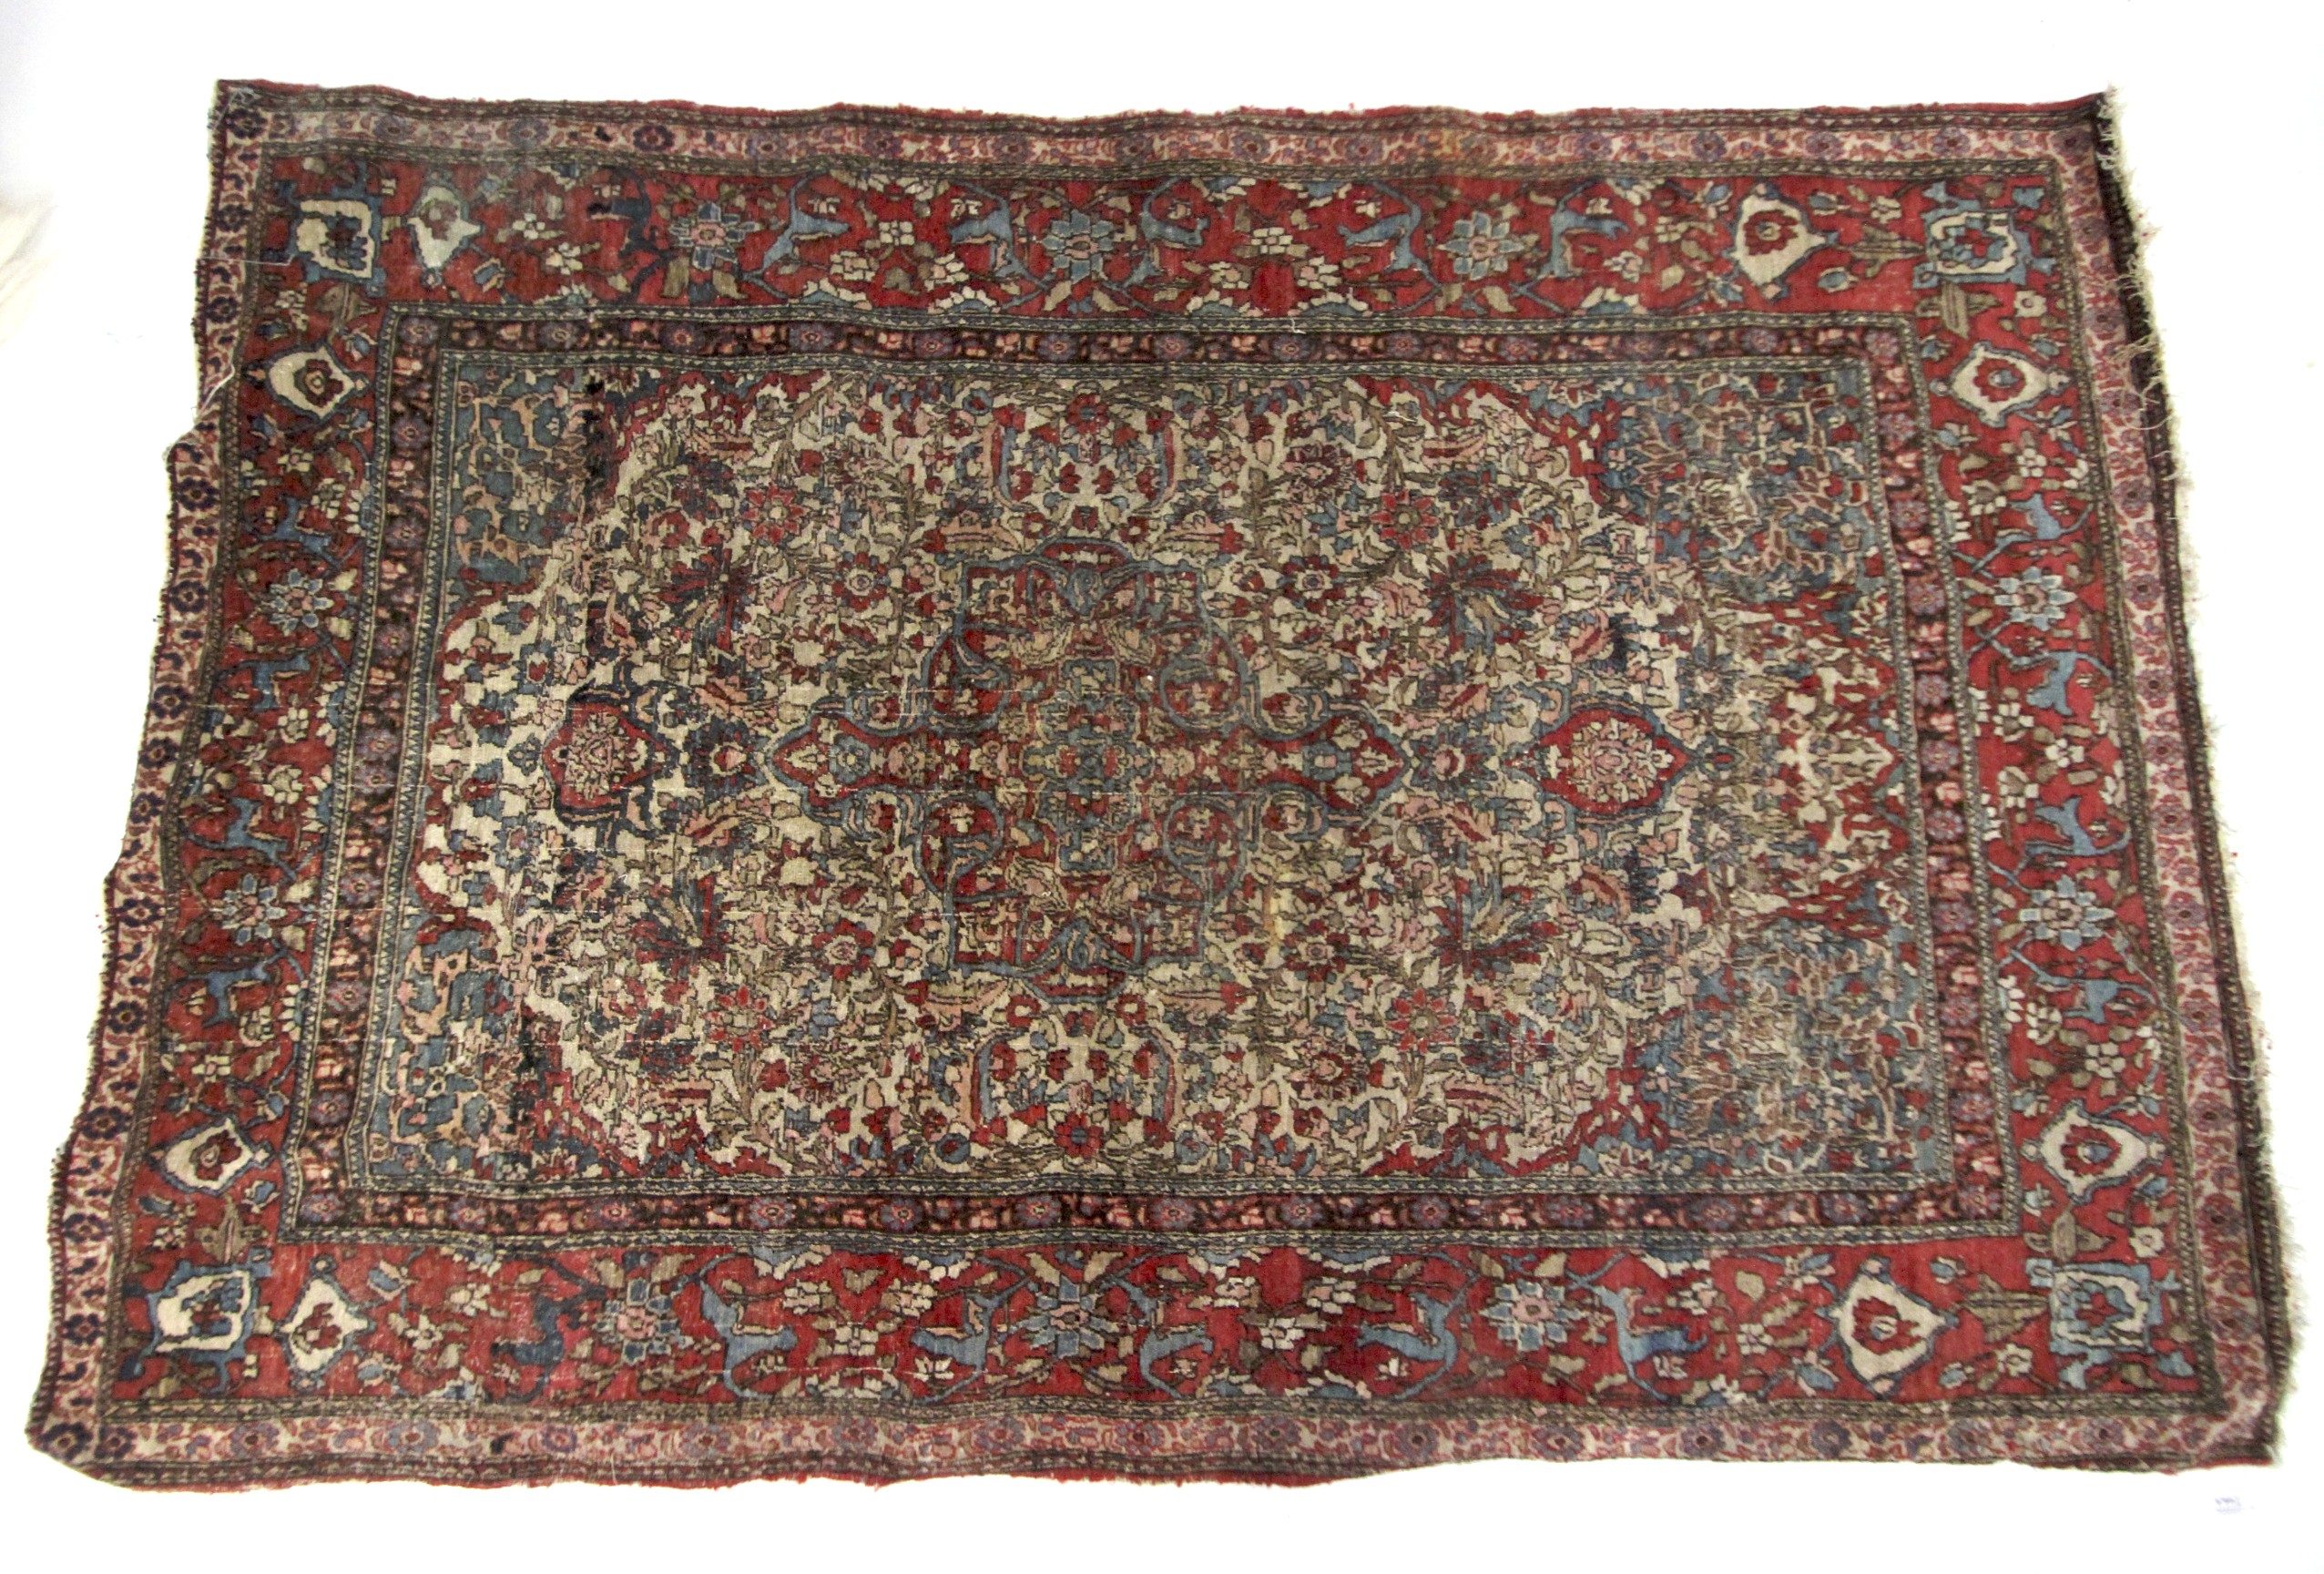 A 20th century rug.